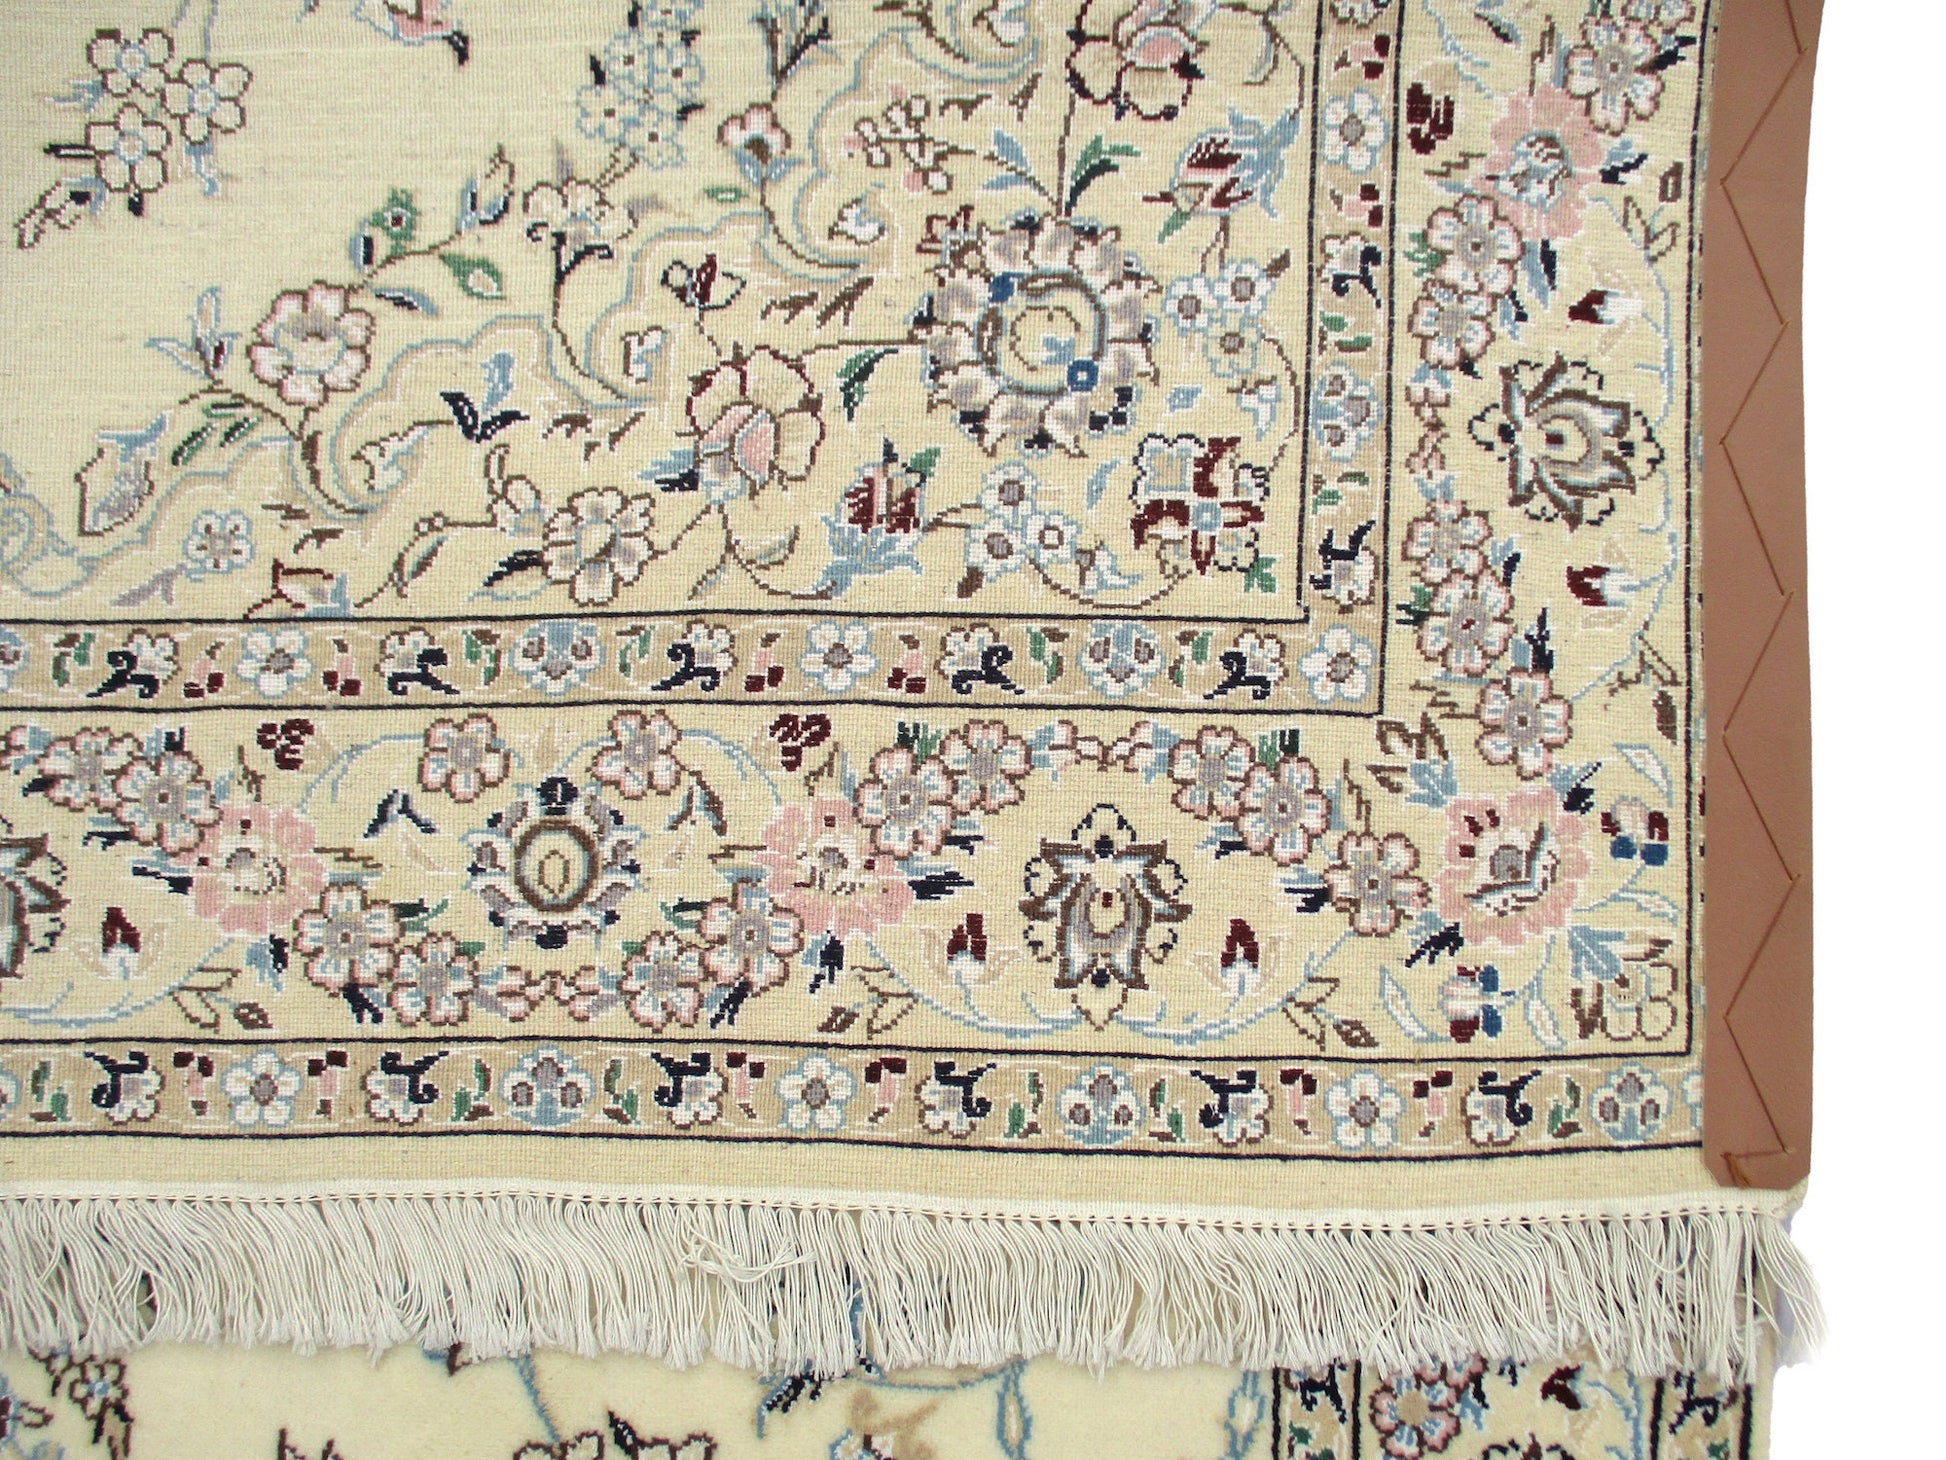 4 x 7 Feet Beige Green Turkish Caucasian Rug | Hand Woven Area Rug | Oriental Persian Rug | Living Room Rug | Accent Floral Pattern Wool Rug